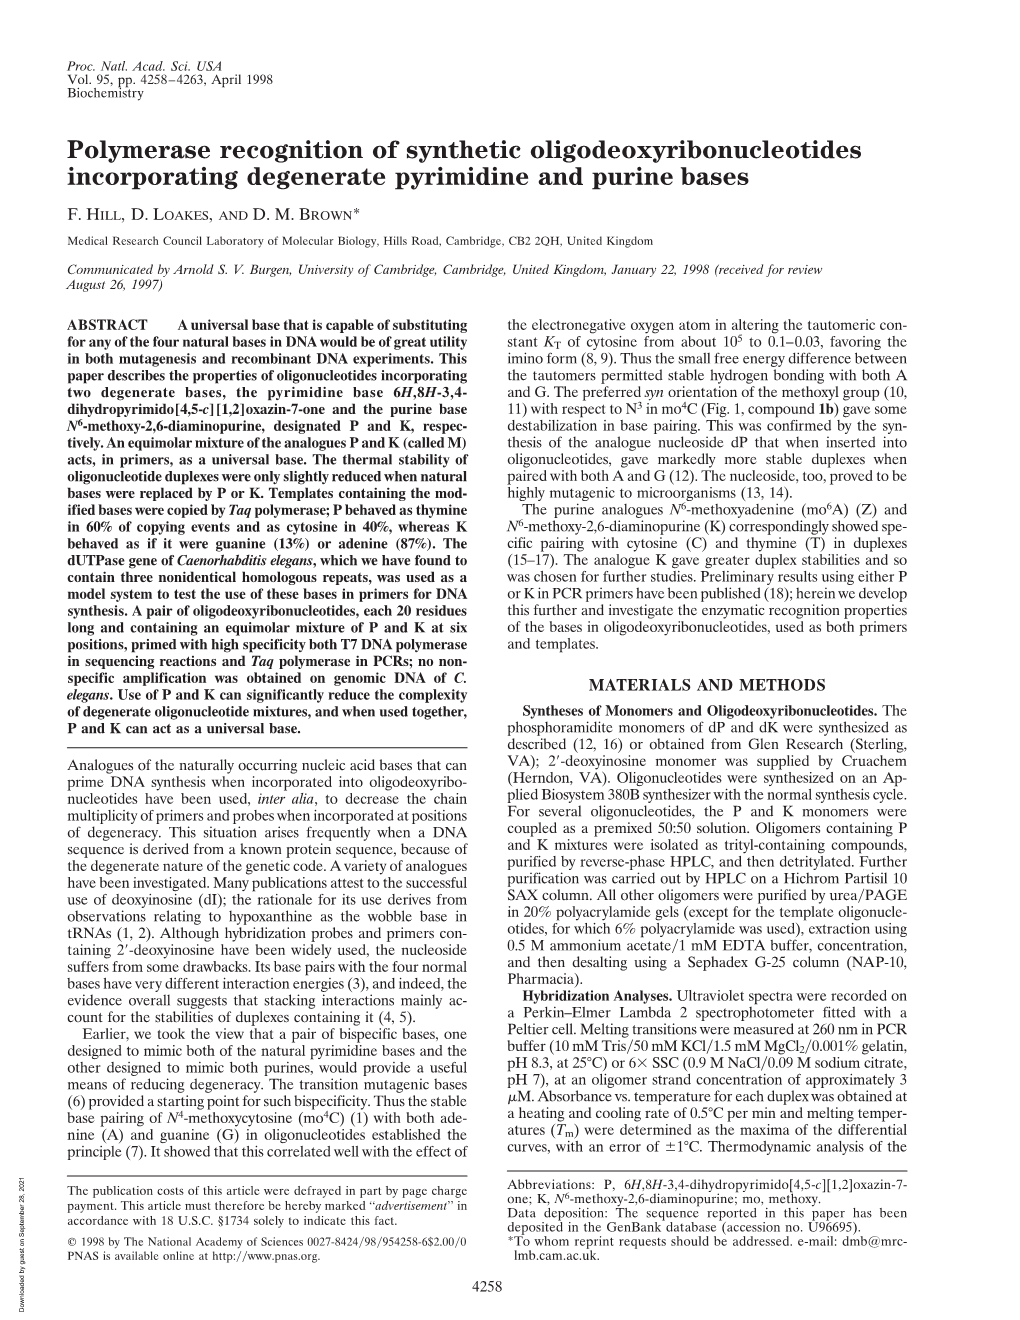 Polymerase Recognition of Synthetic Oligodeoxyribonucleotides Incorporating Degenerate Pyrimidine and Purine Bases